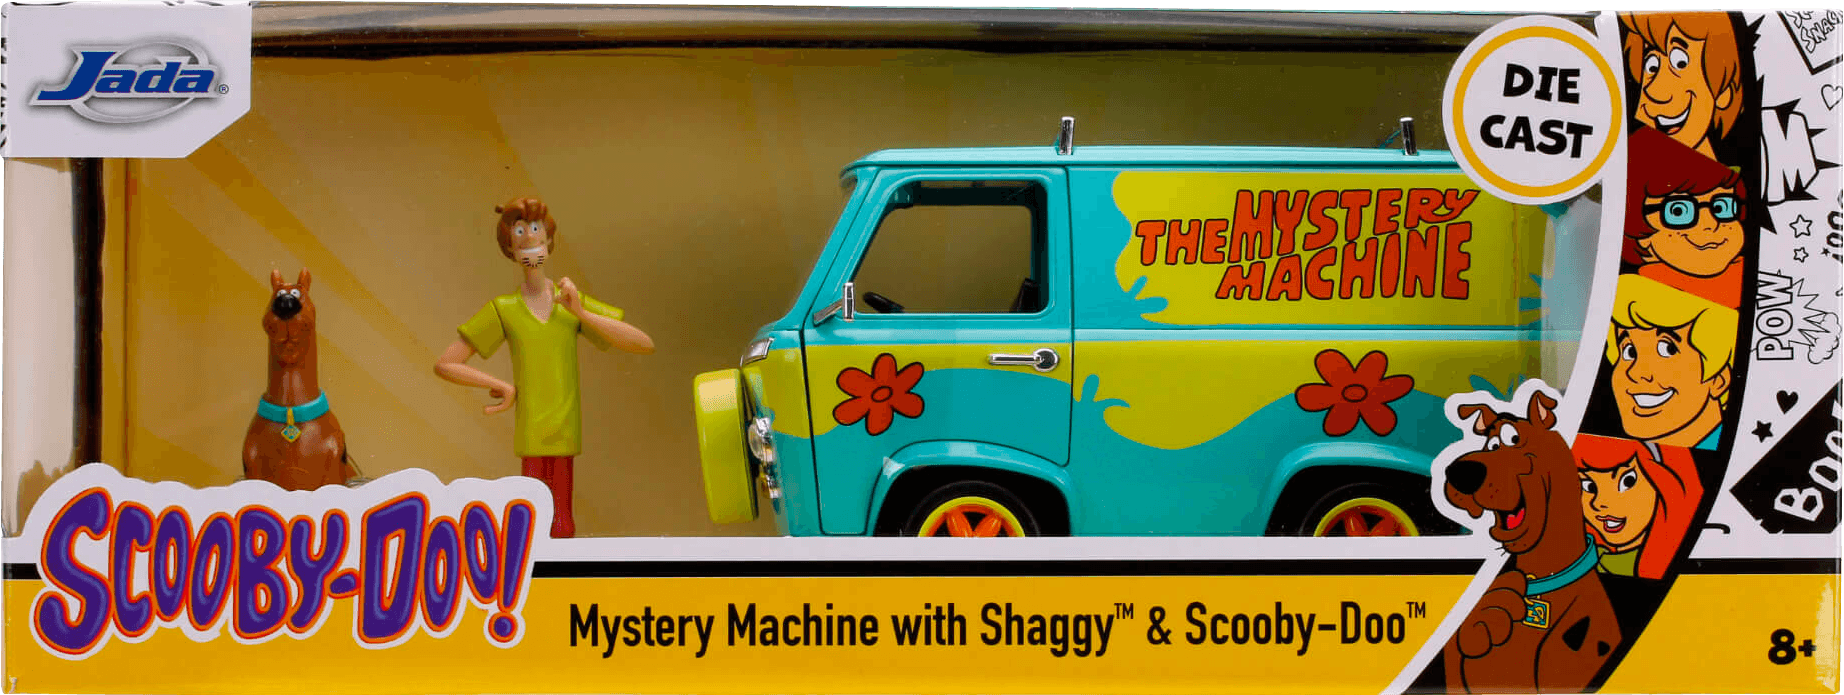 JAD31720 Scooby Doo - Mystery Machine with Figure 1:24 Scale Hollywood Ride - Jada Toys - Titan Pop Culture